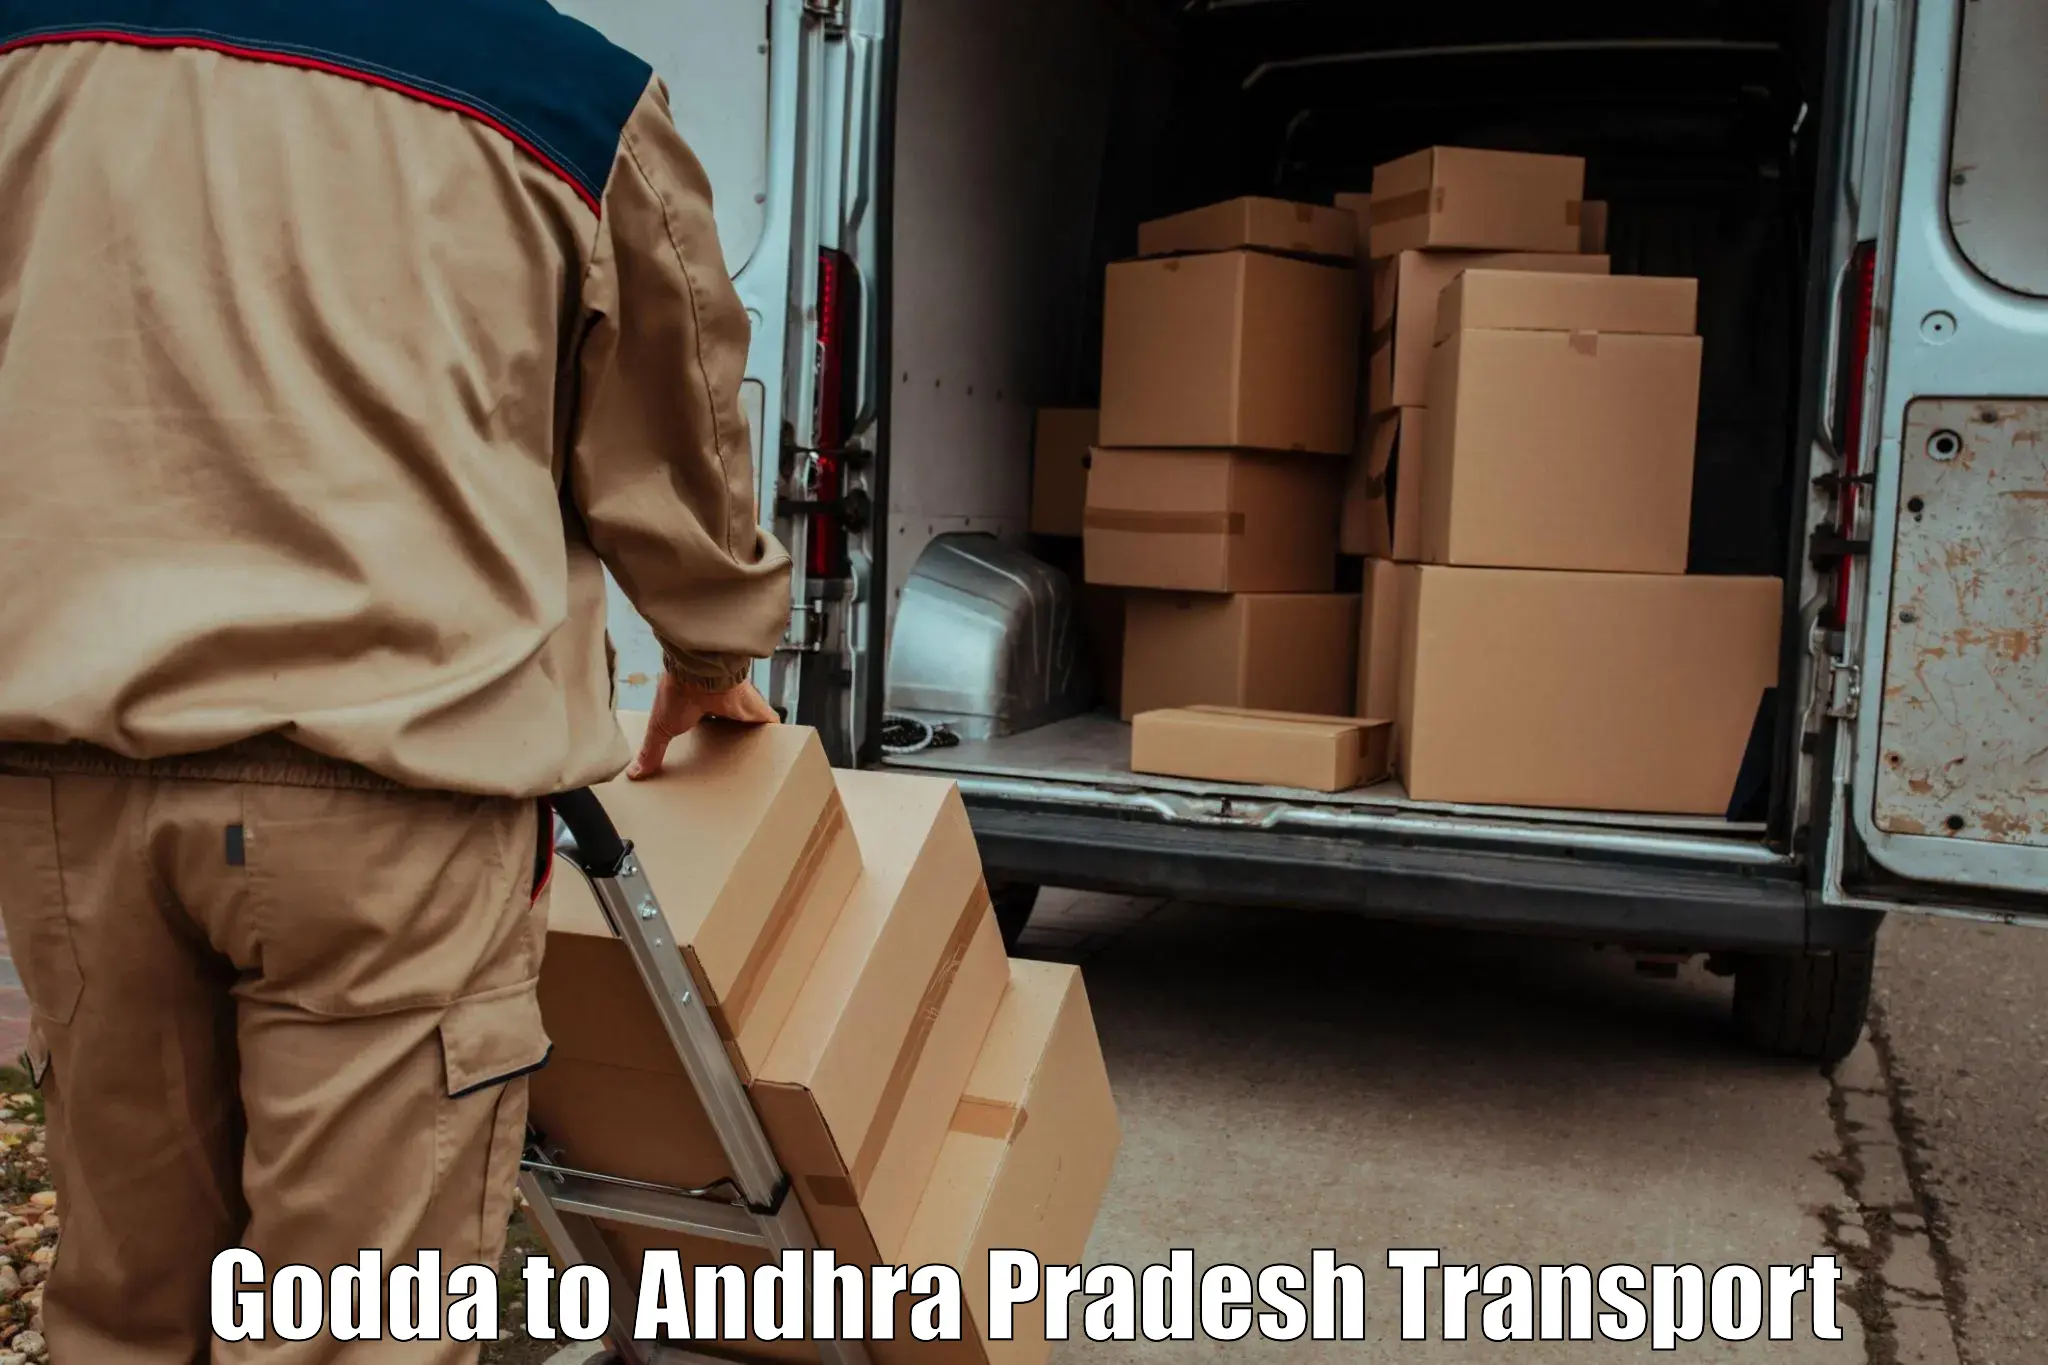 Delivery service Godda to Giddalur